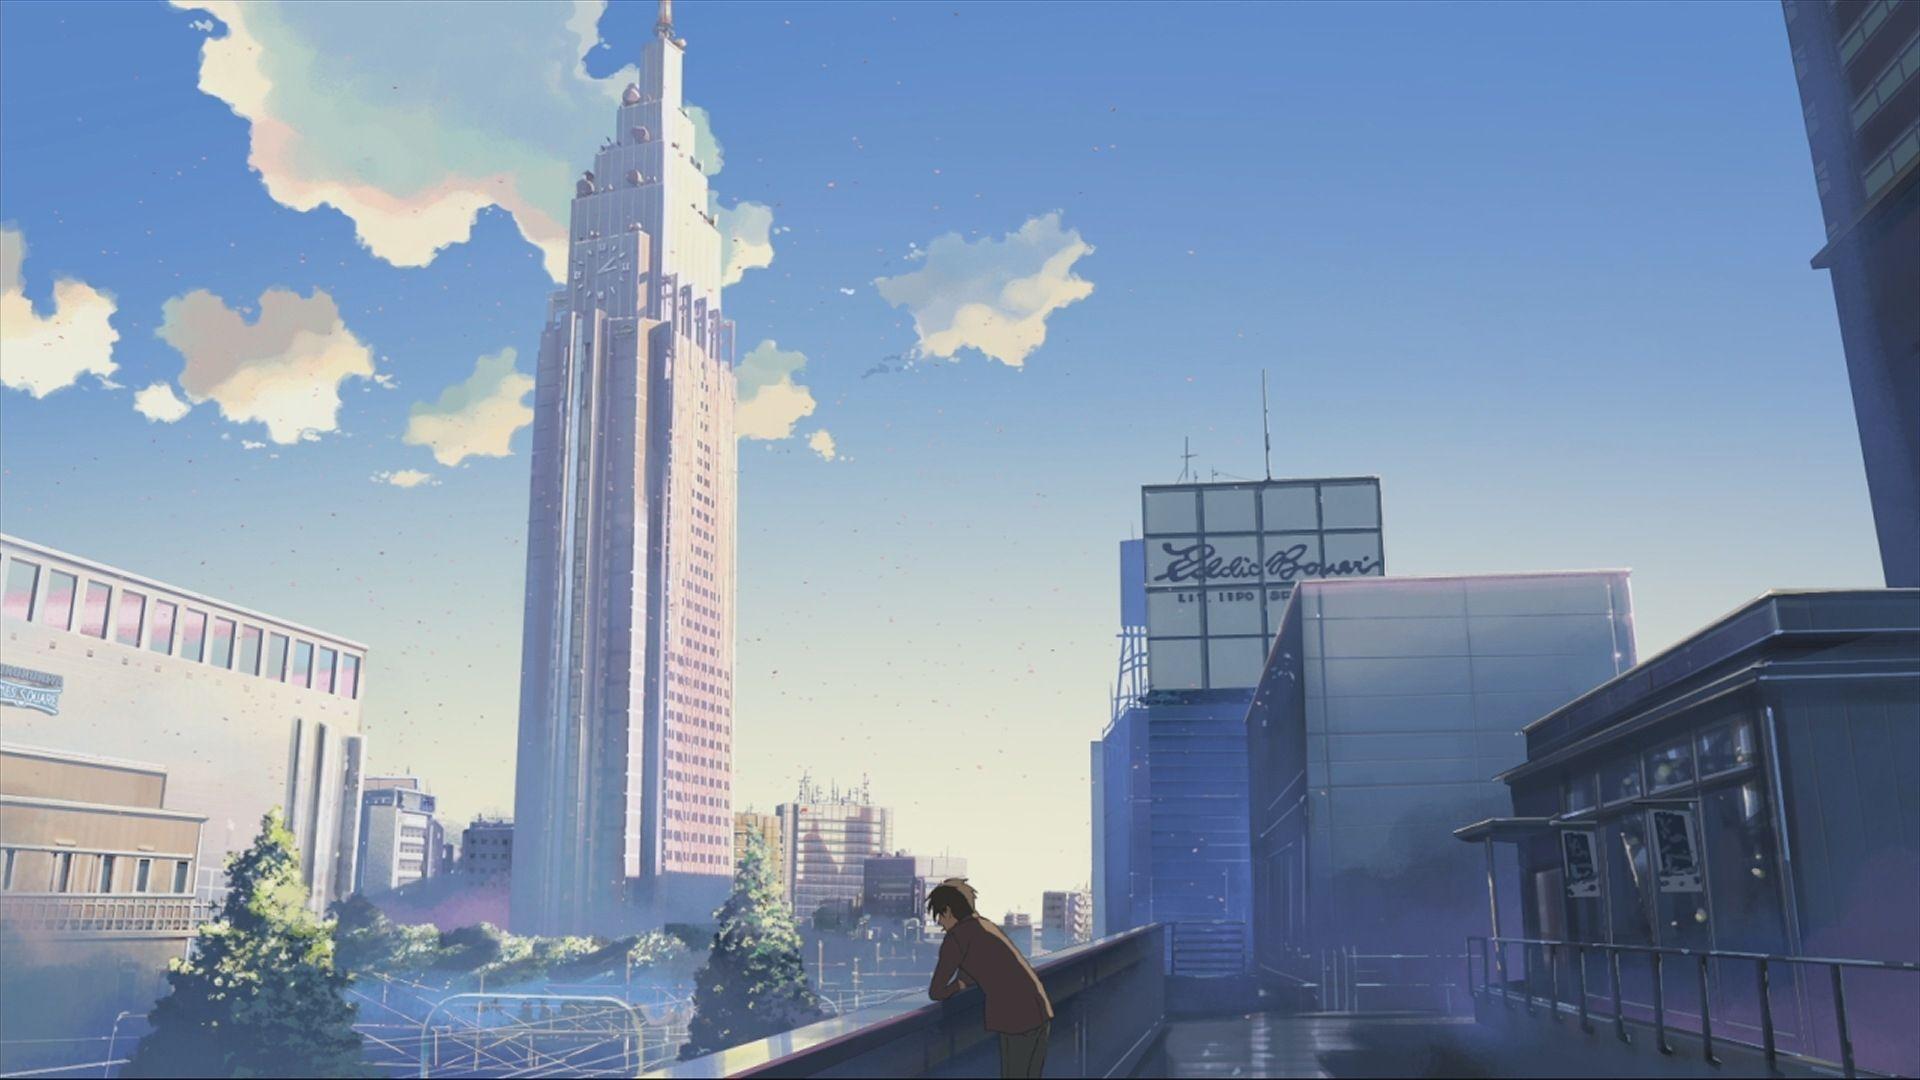 Aesthetic Anime Scenery Wallpaper HD